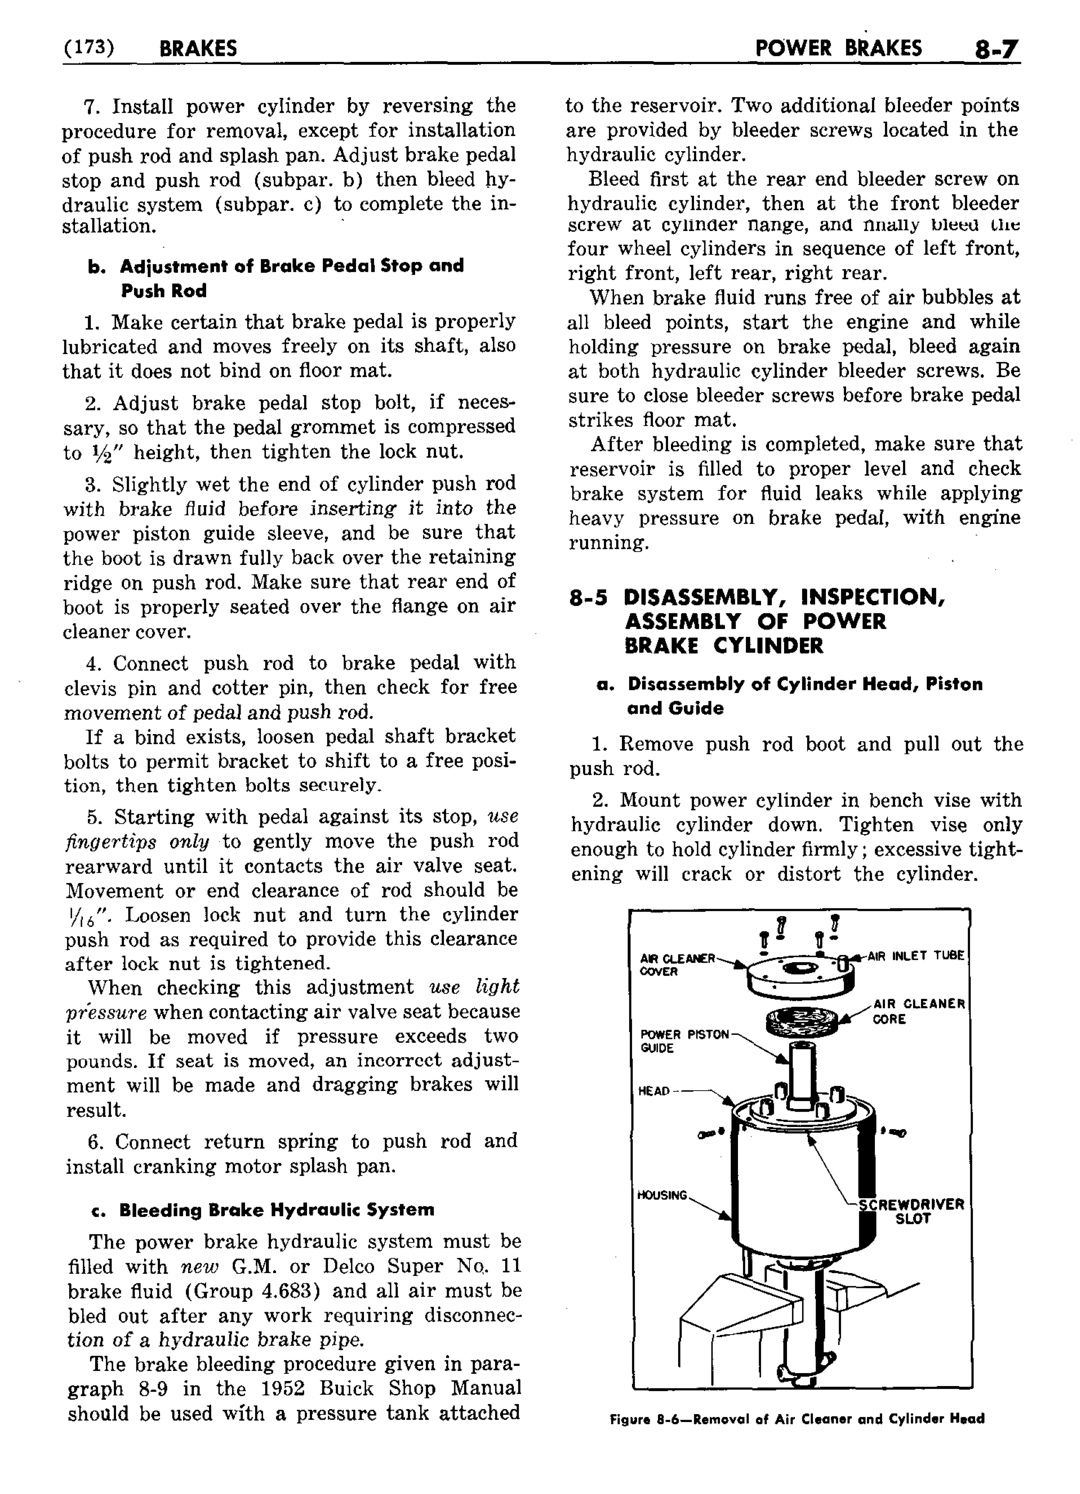 n_09 1953 Buick Shop Manual - Brakes-007-007.jpg